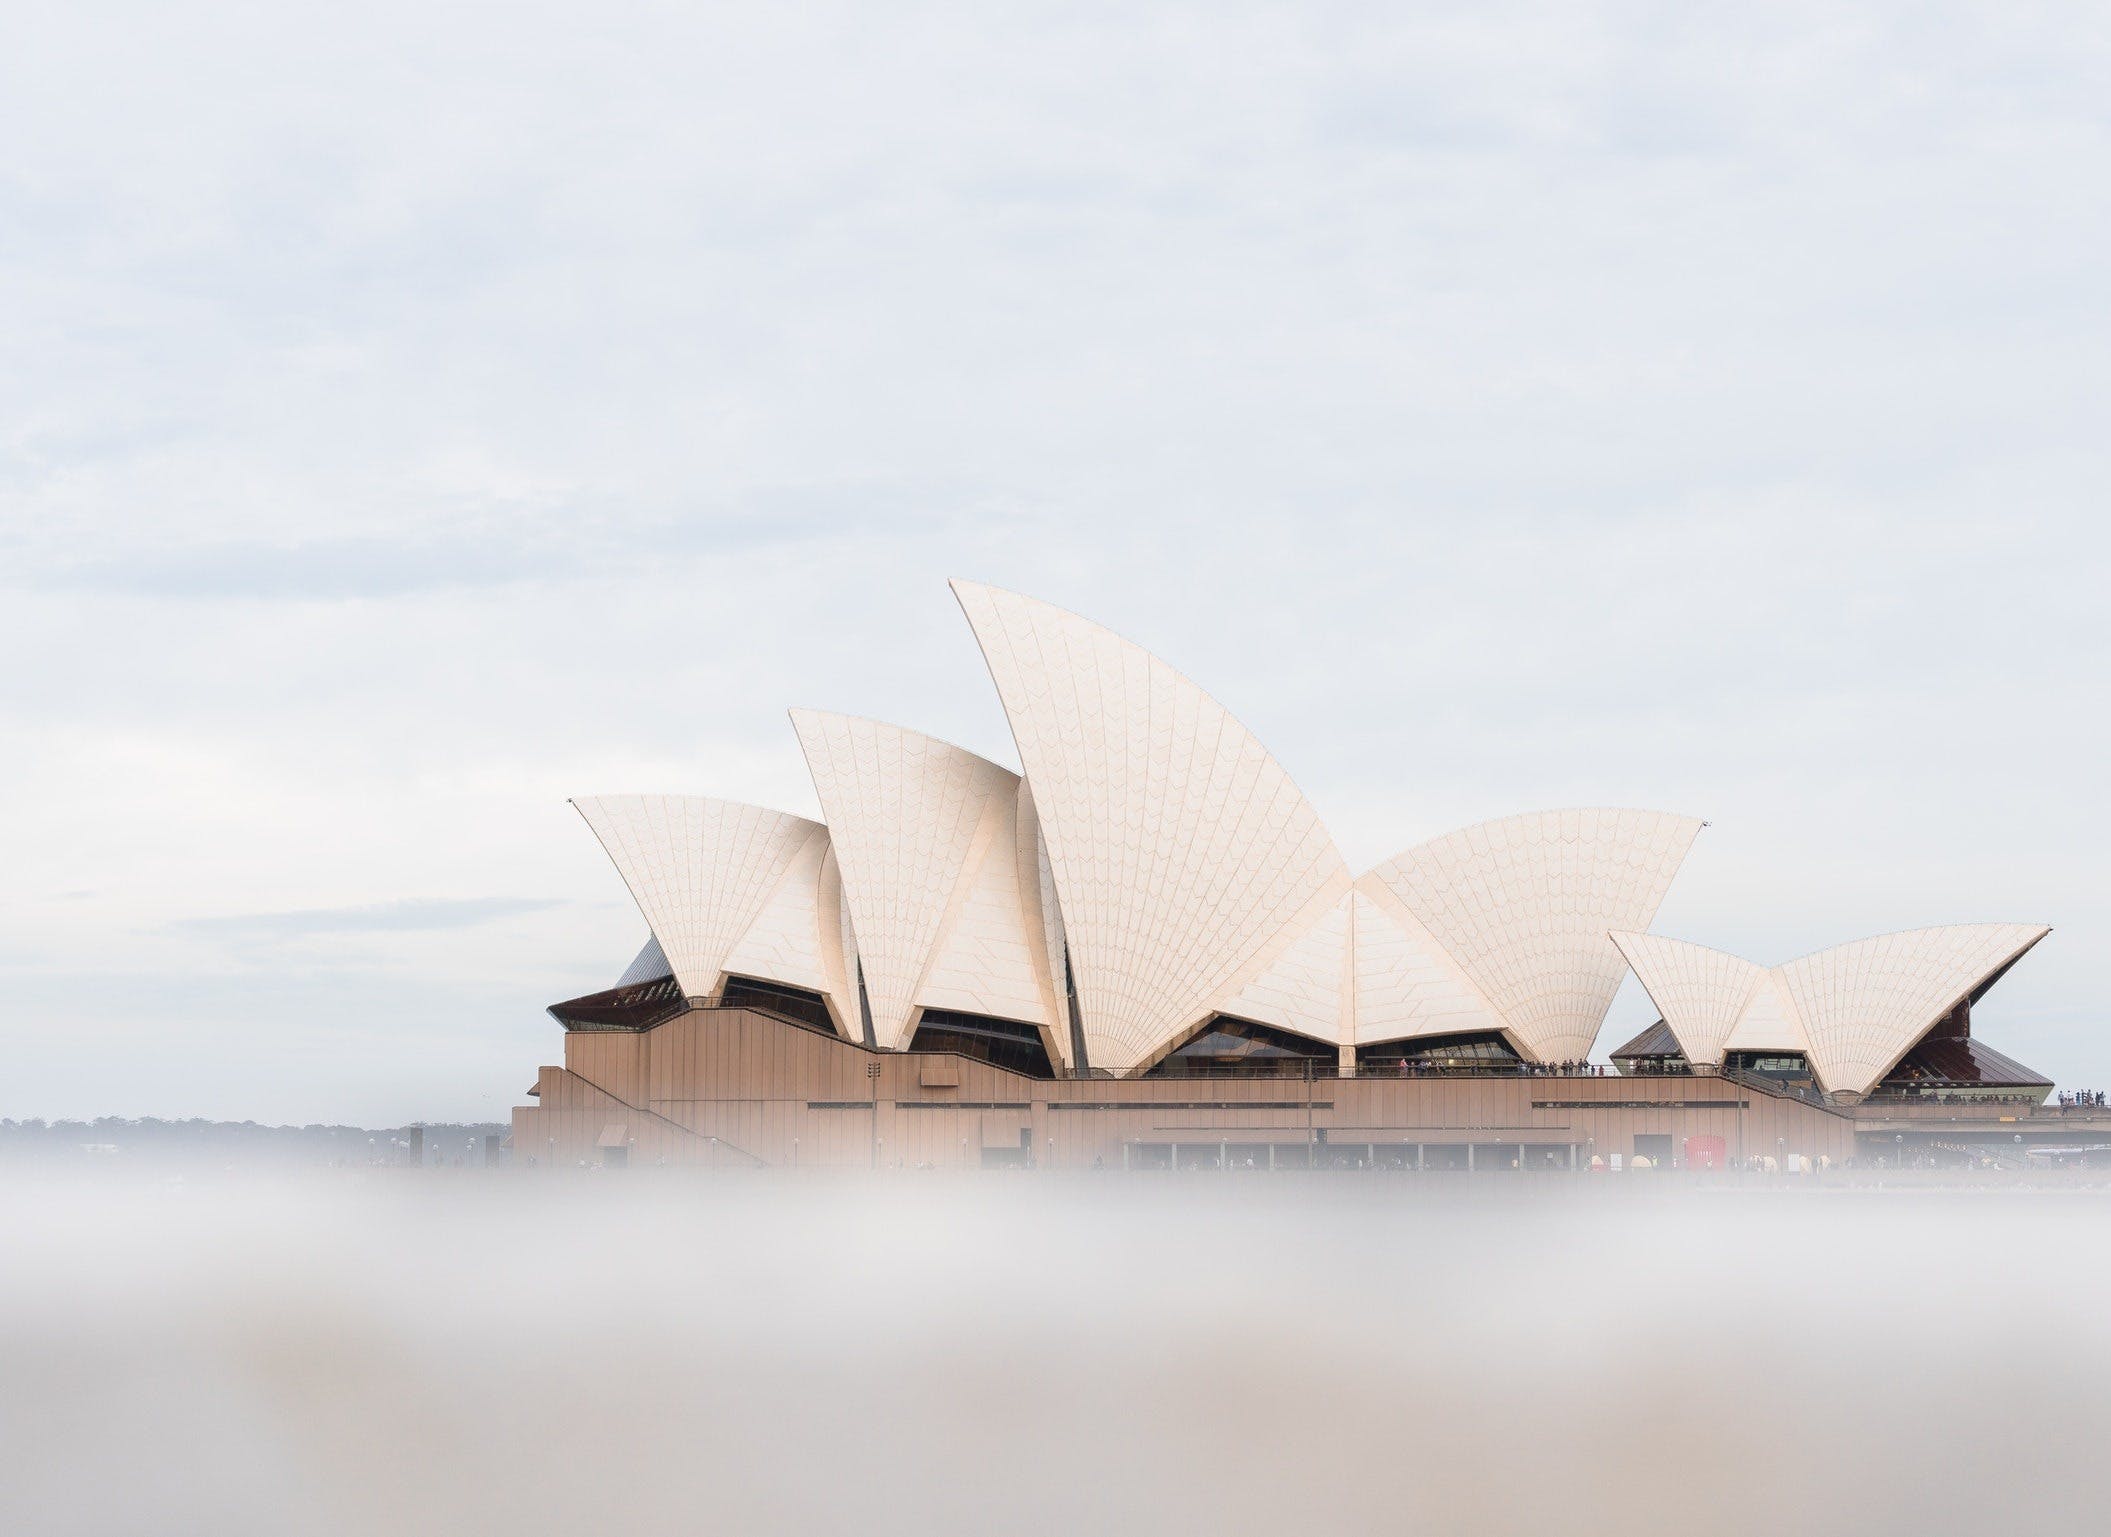 Learn to take better photos The Rocks - Restaurants Sydney